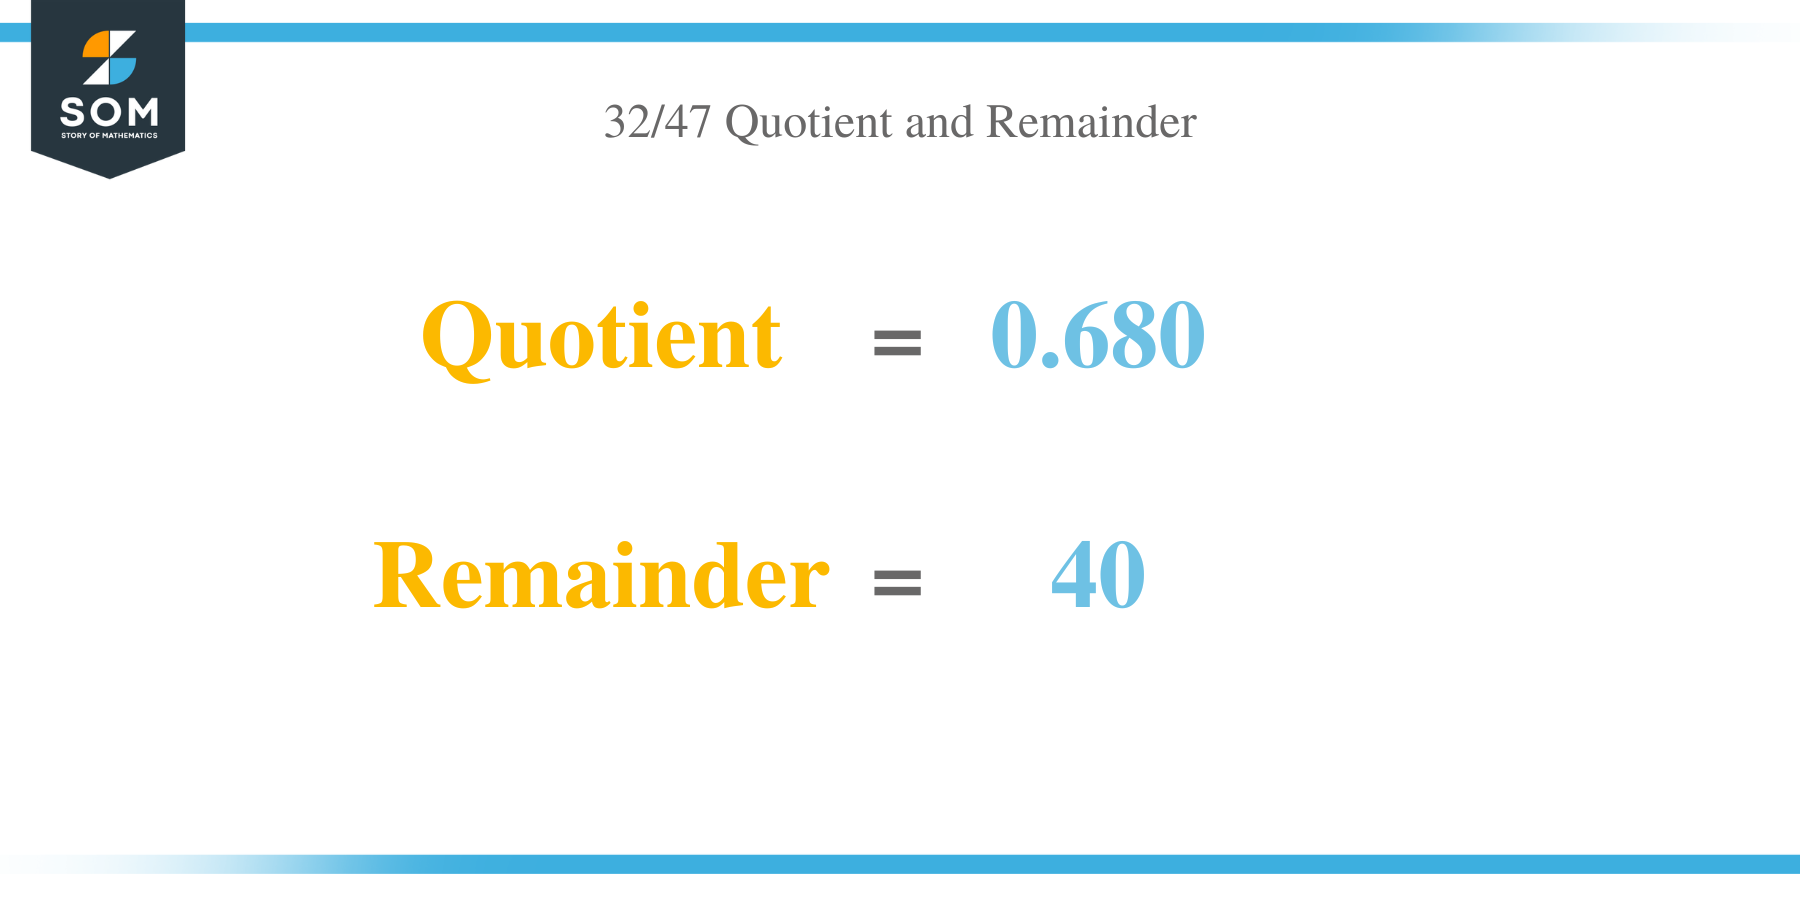 Quotient and Remainder of 32 per 47